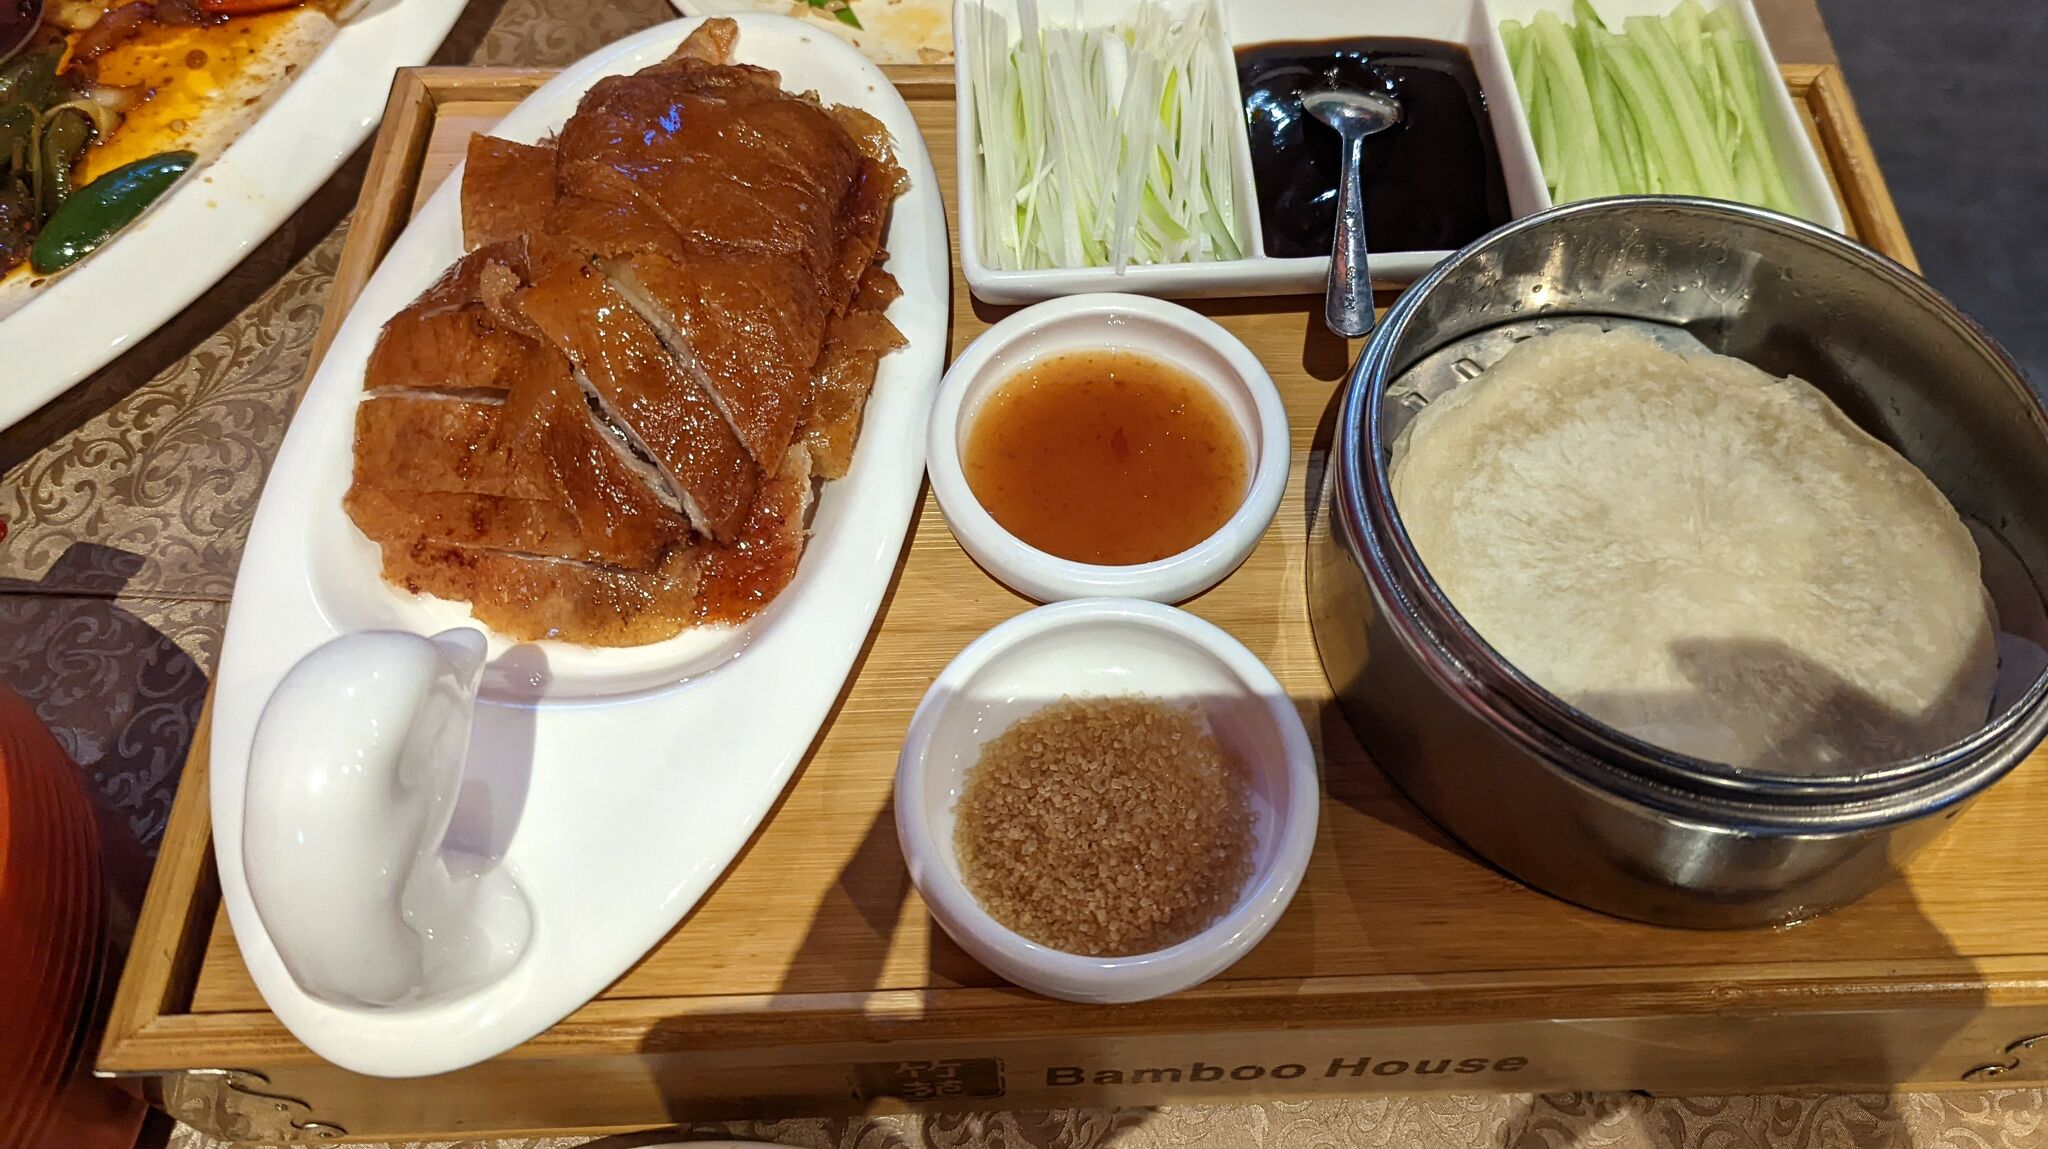 Austin's Bamboo House provides Sichuan cuisine, Peking duck